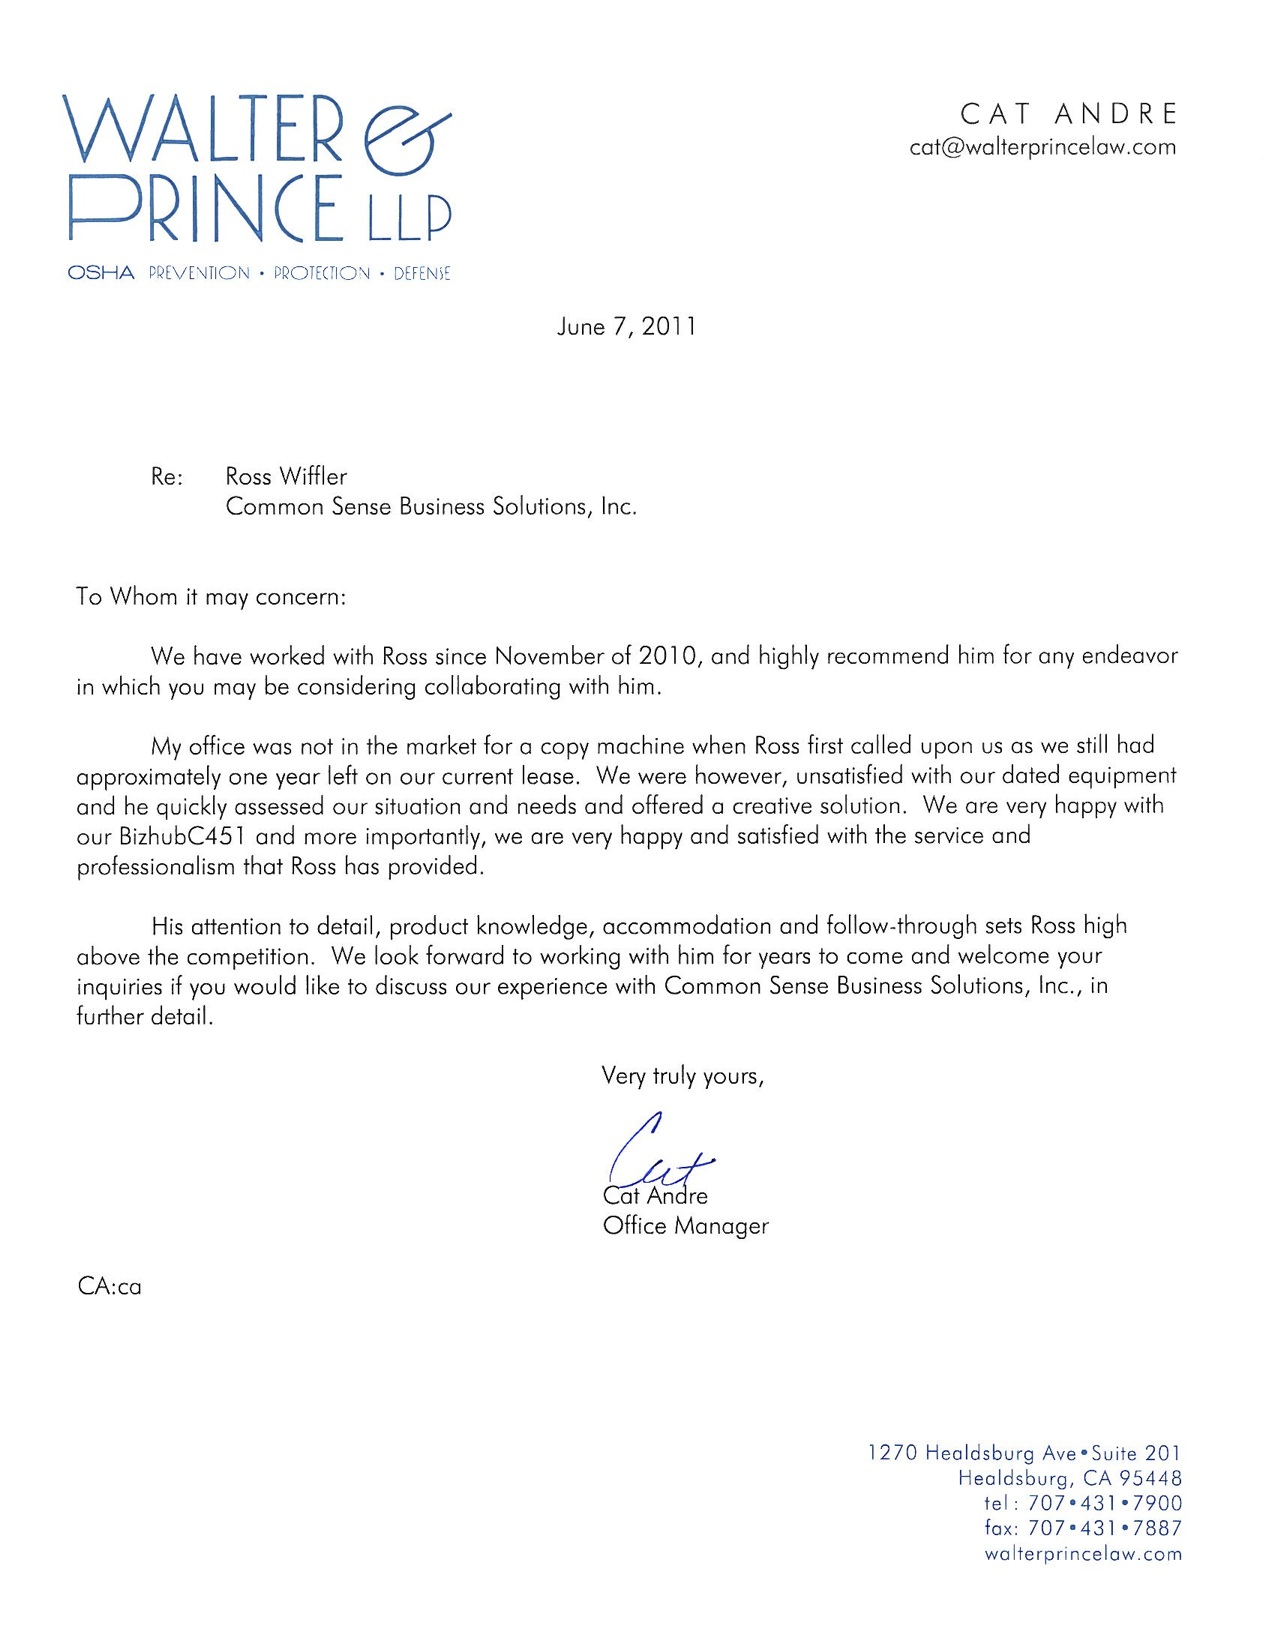 walter prince testimonial letter